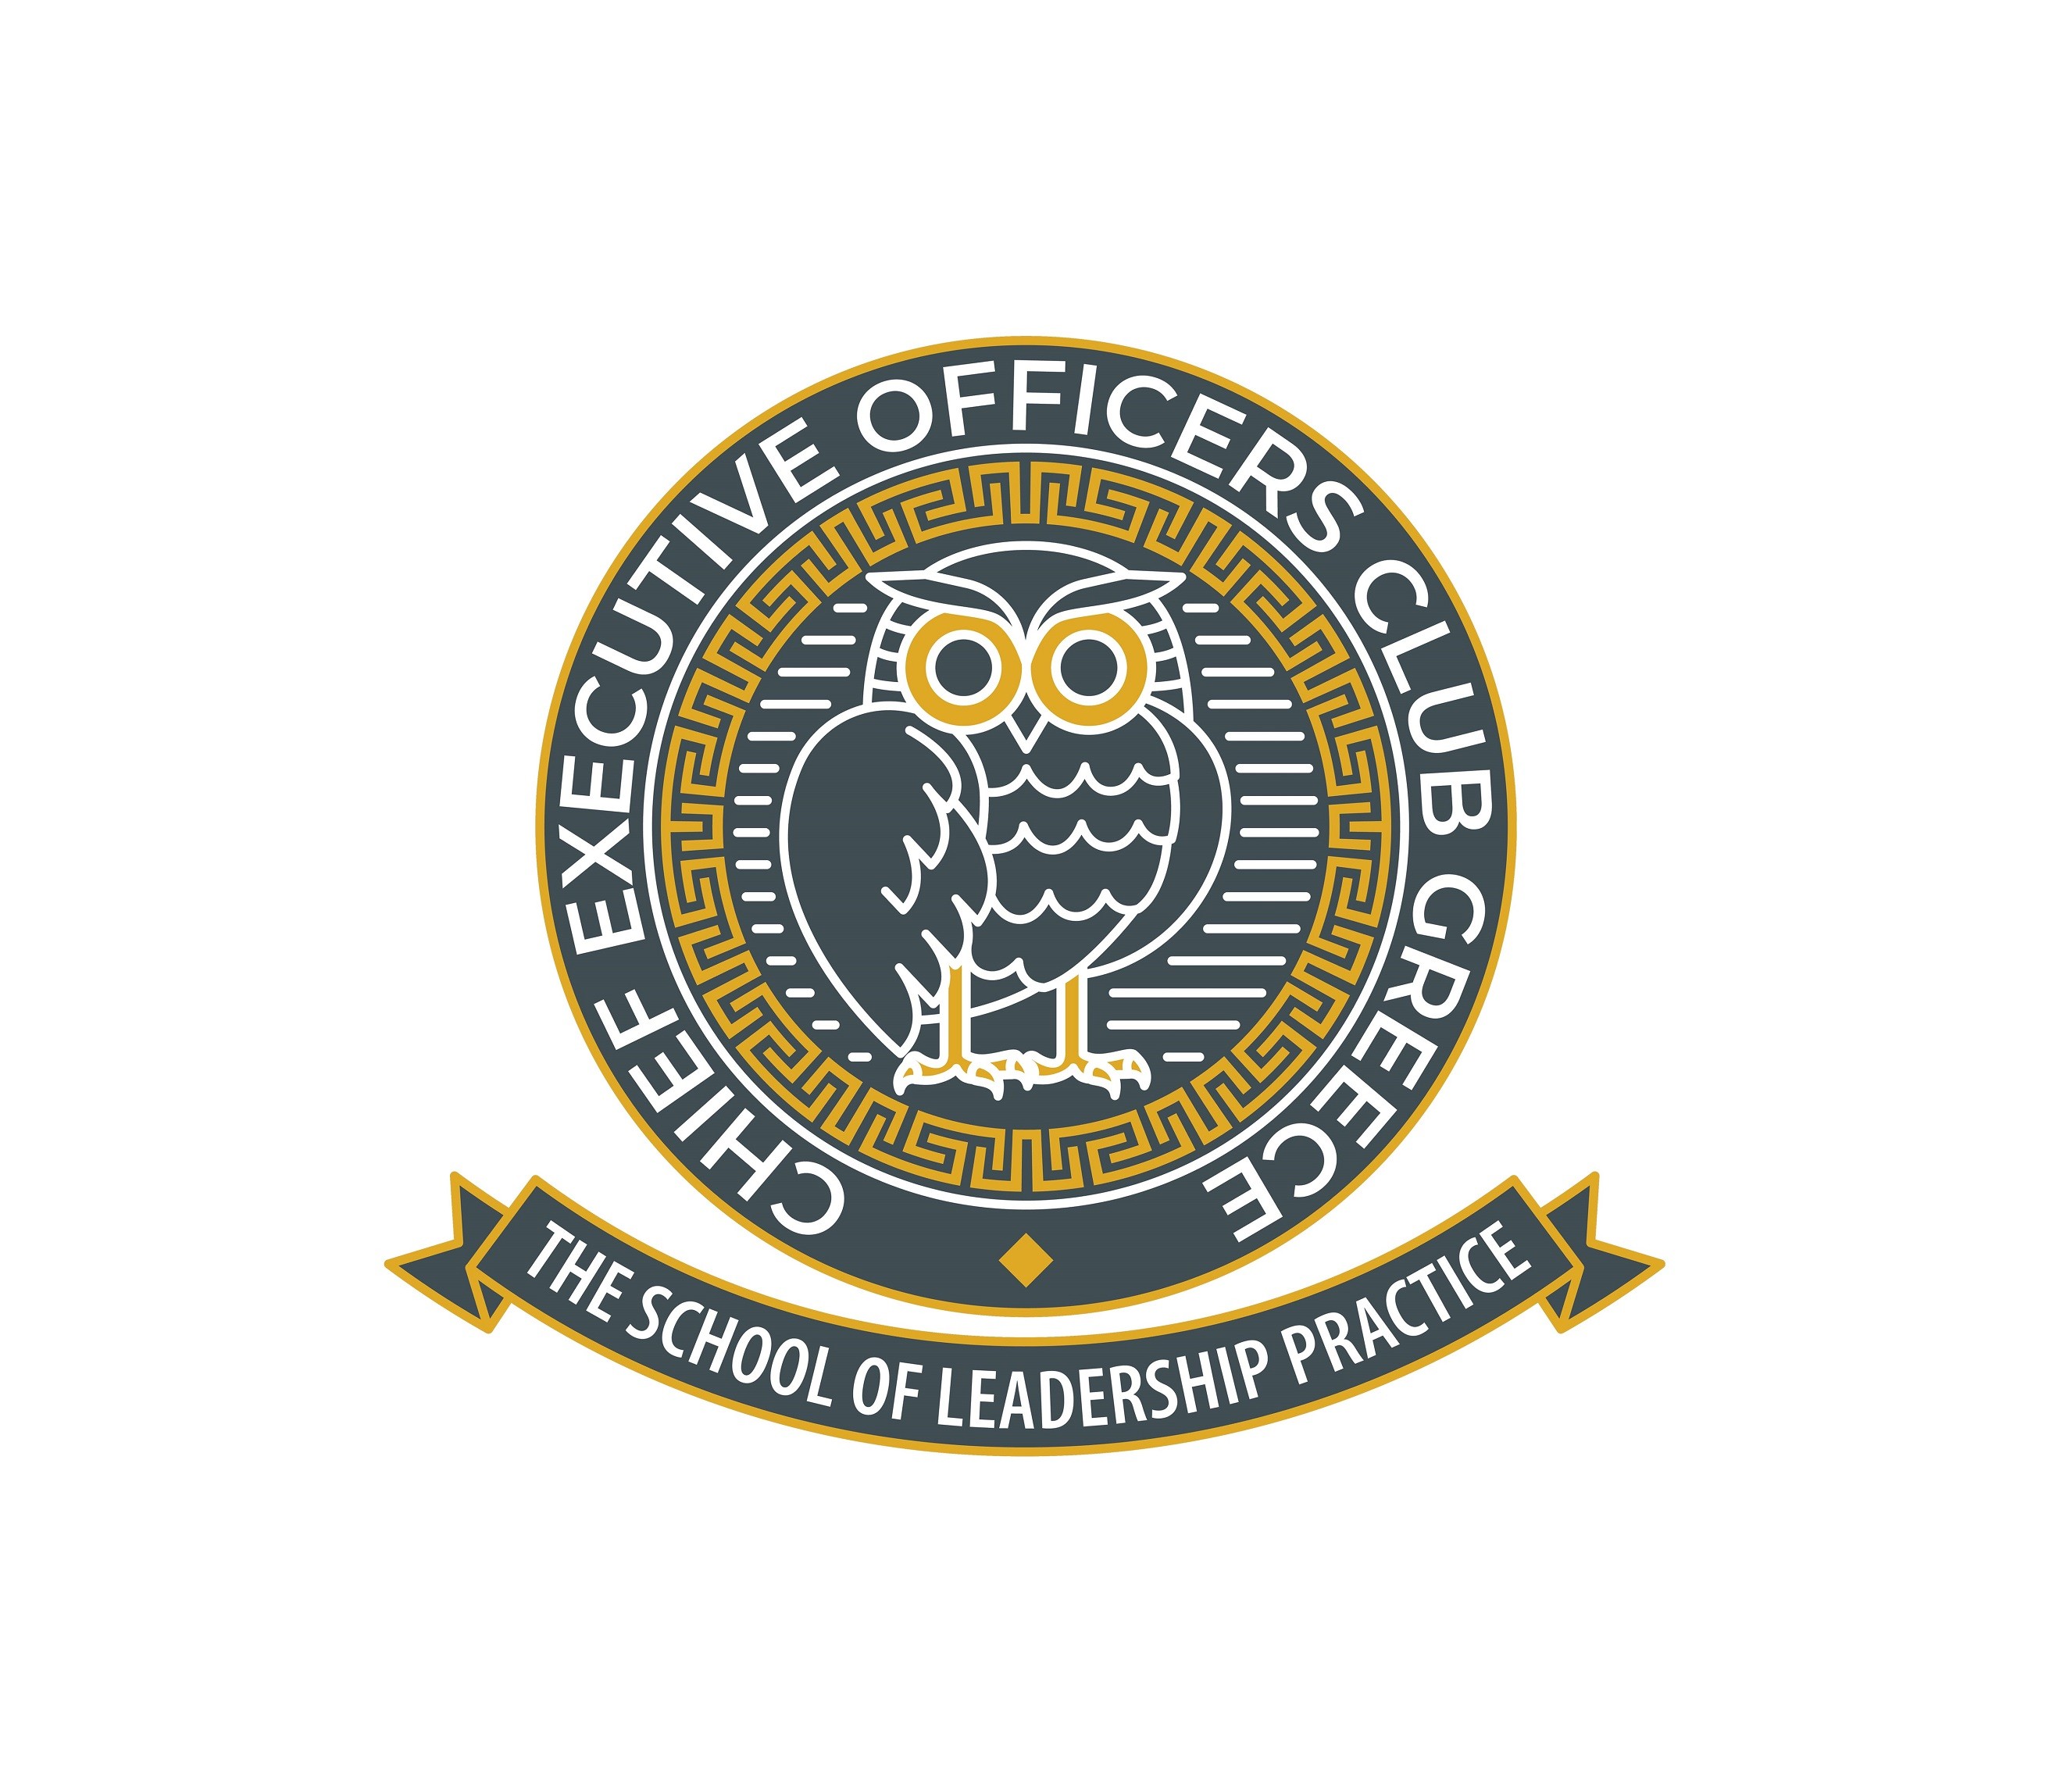 Dr. Πολυδεύκης Λουκόπουλος: «Το School of Leadership Practice είναι άρρηκτα συνδεδεμένο με το όραμα του CEO Clubs Greece»